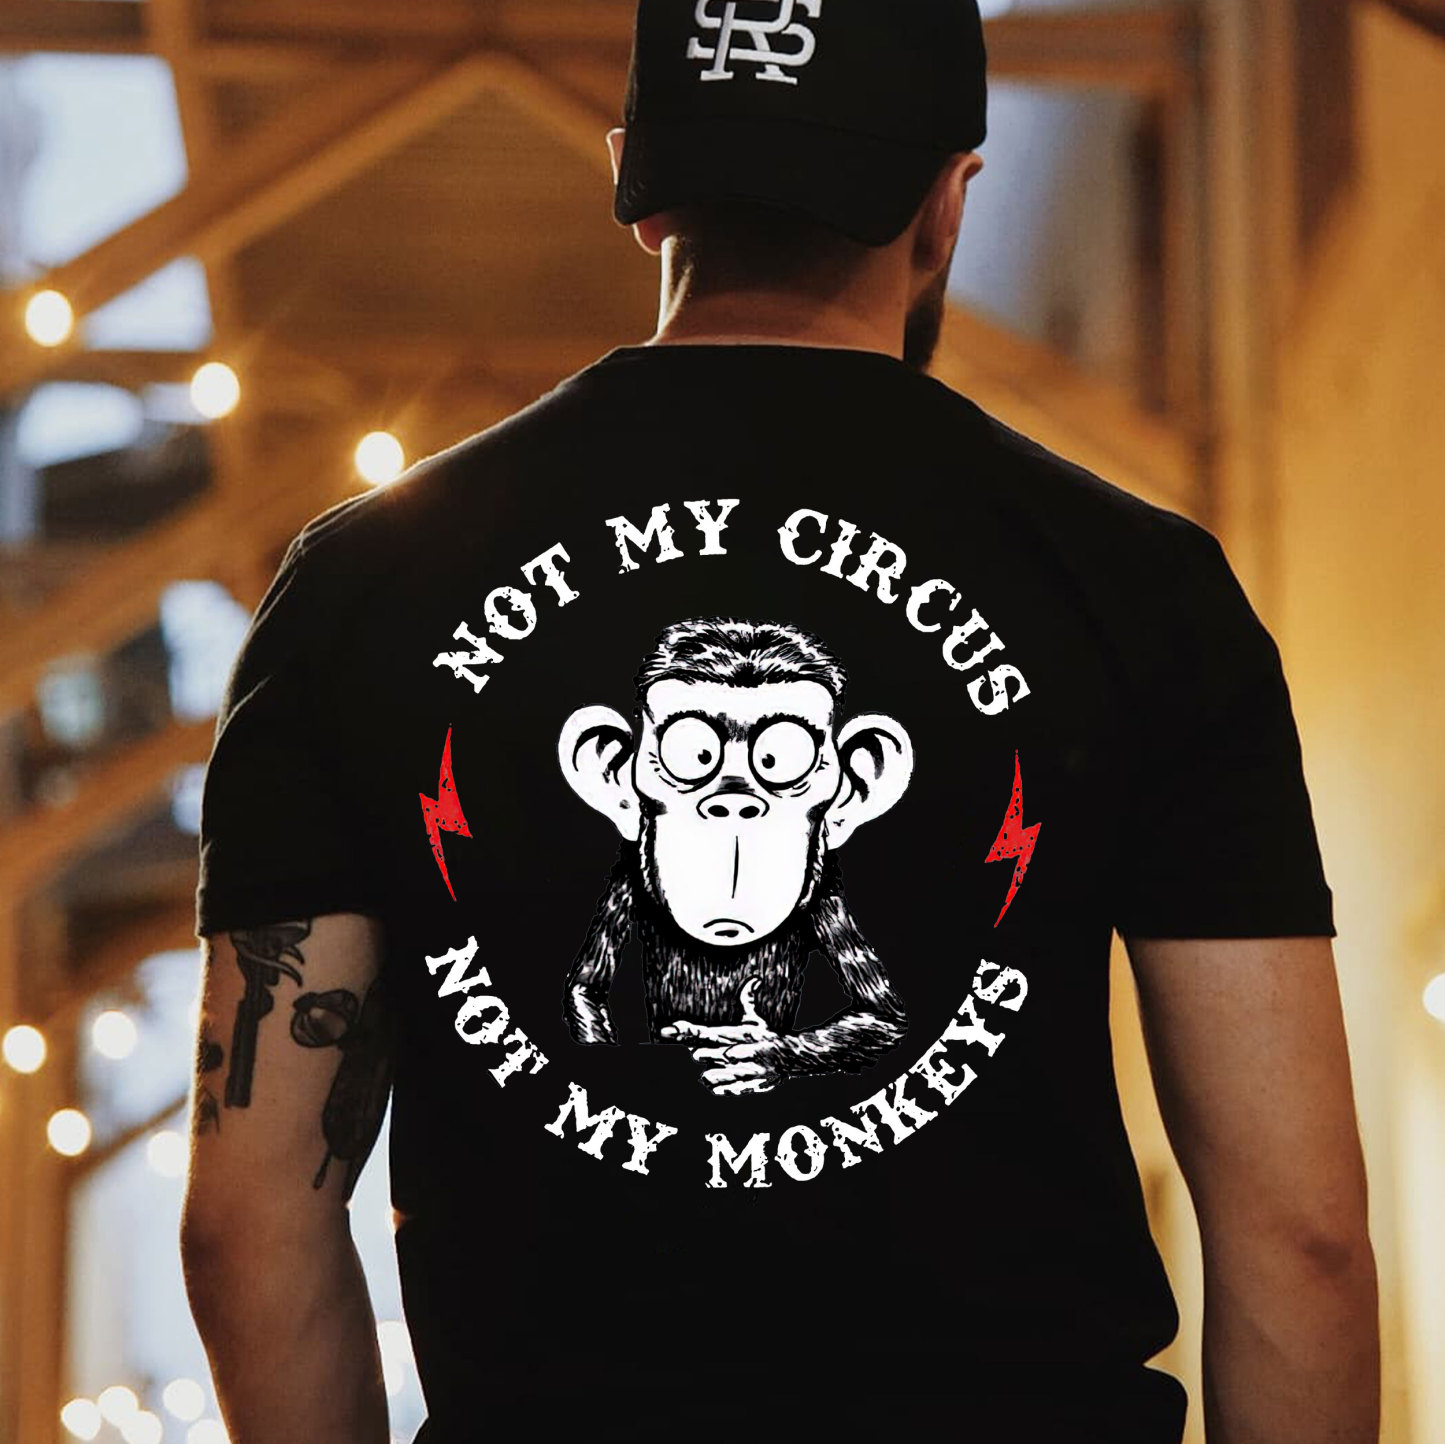 NOT MY CIRCUS NOT MY MONKEYS Print T-Shirt